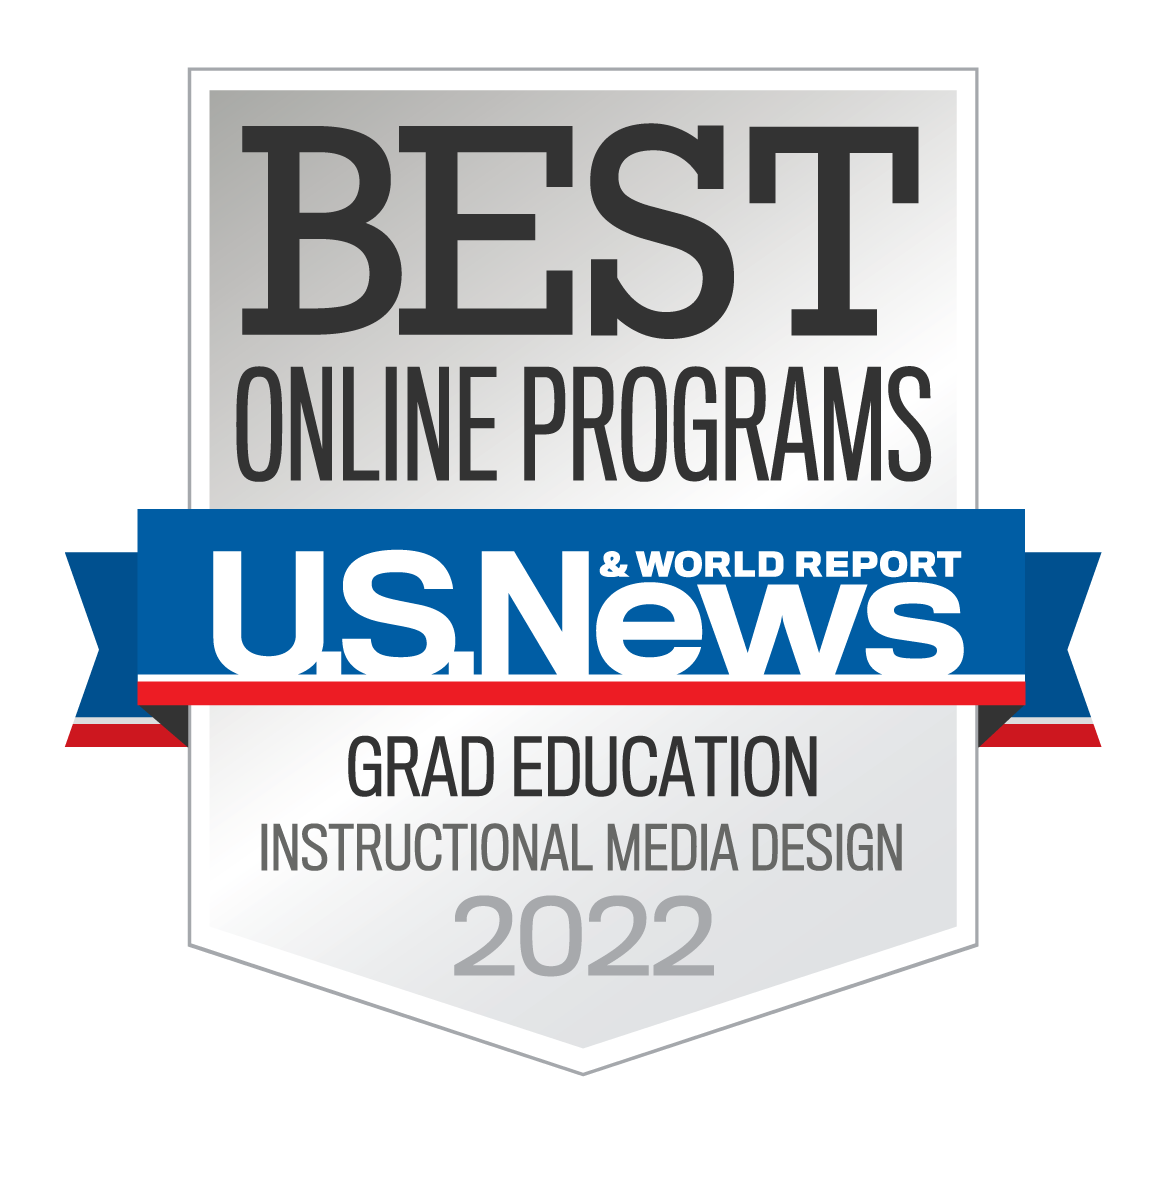 US News and World Report - best grad education degree - instructional media design 2022